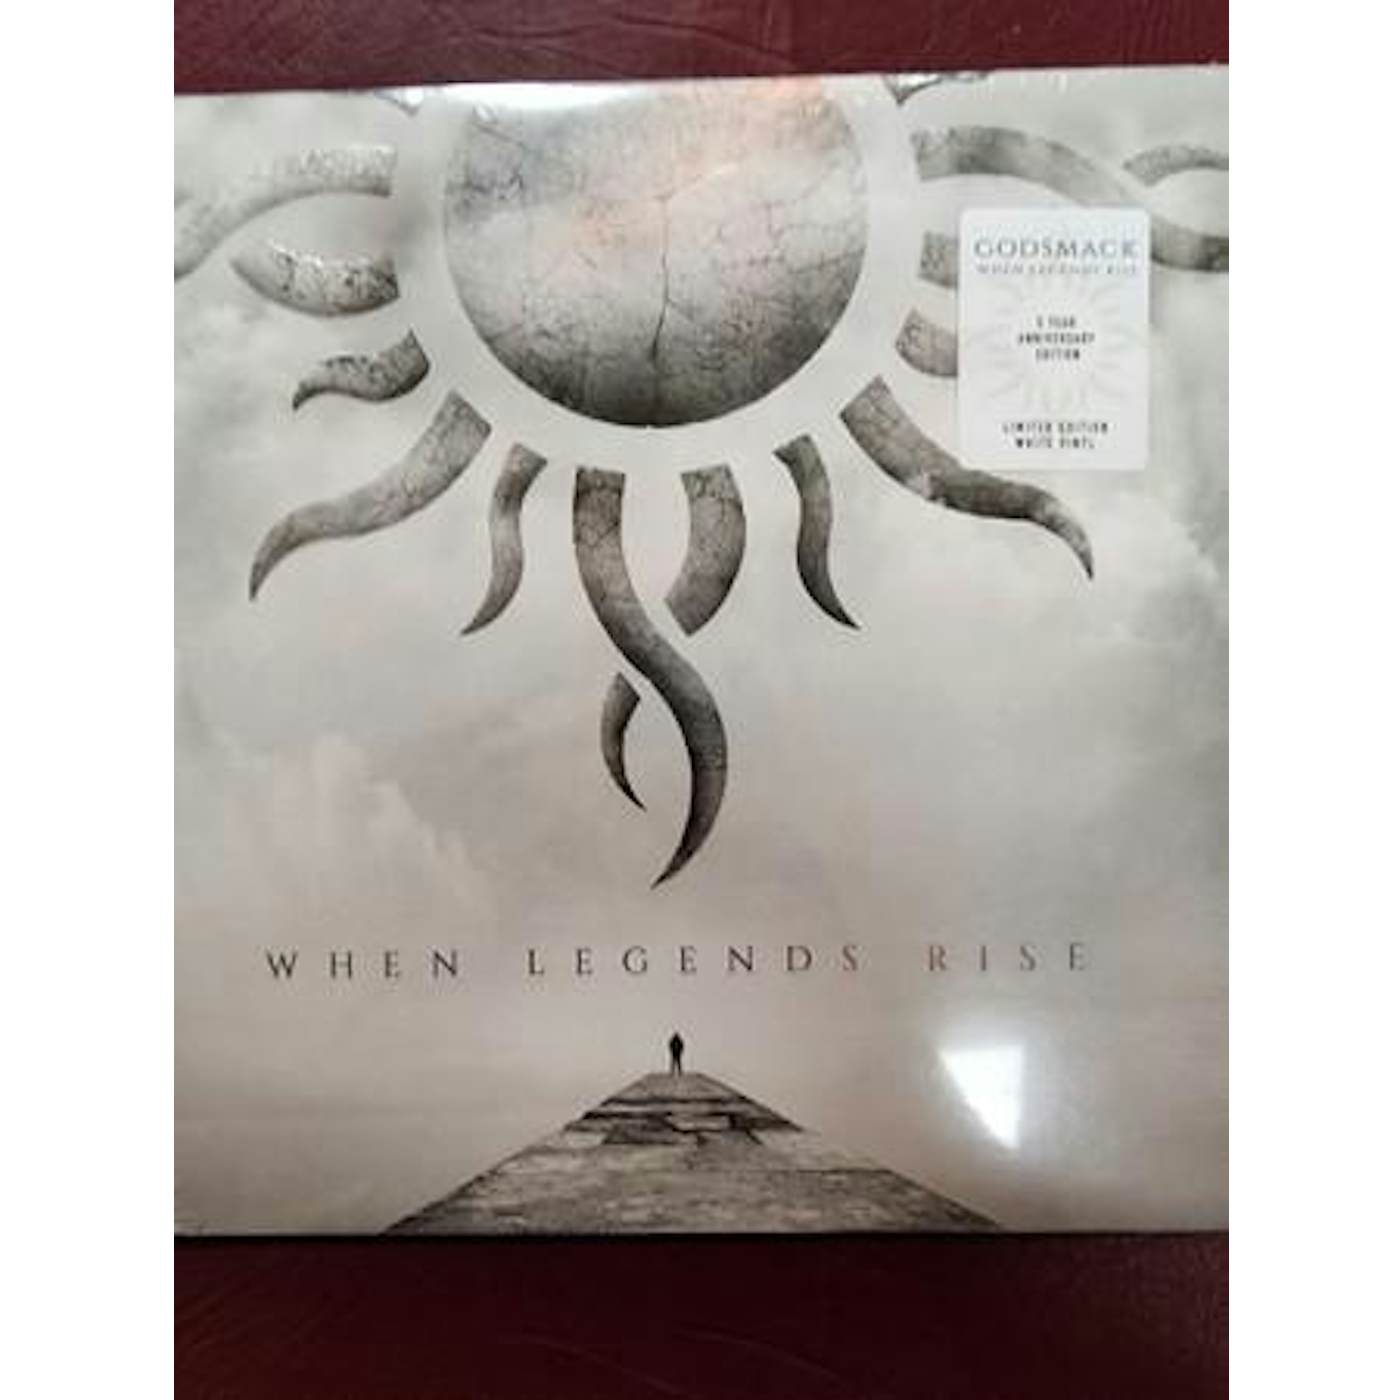 Godsmack WHEN LEGENDS RISE (5TH ANNIVERSARY/WHITE VINYL/LIMITED EDITION) Vinyl Record